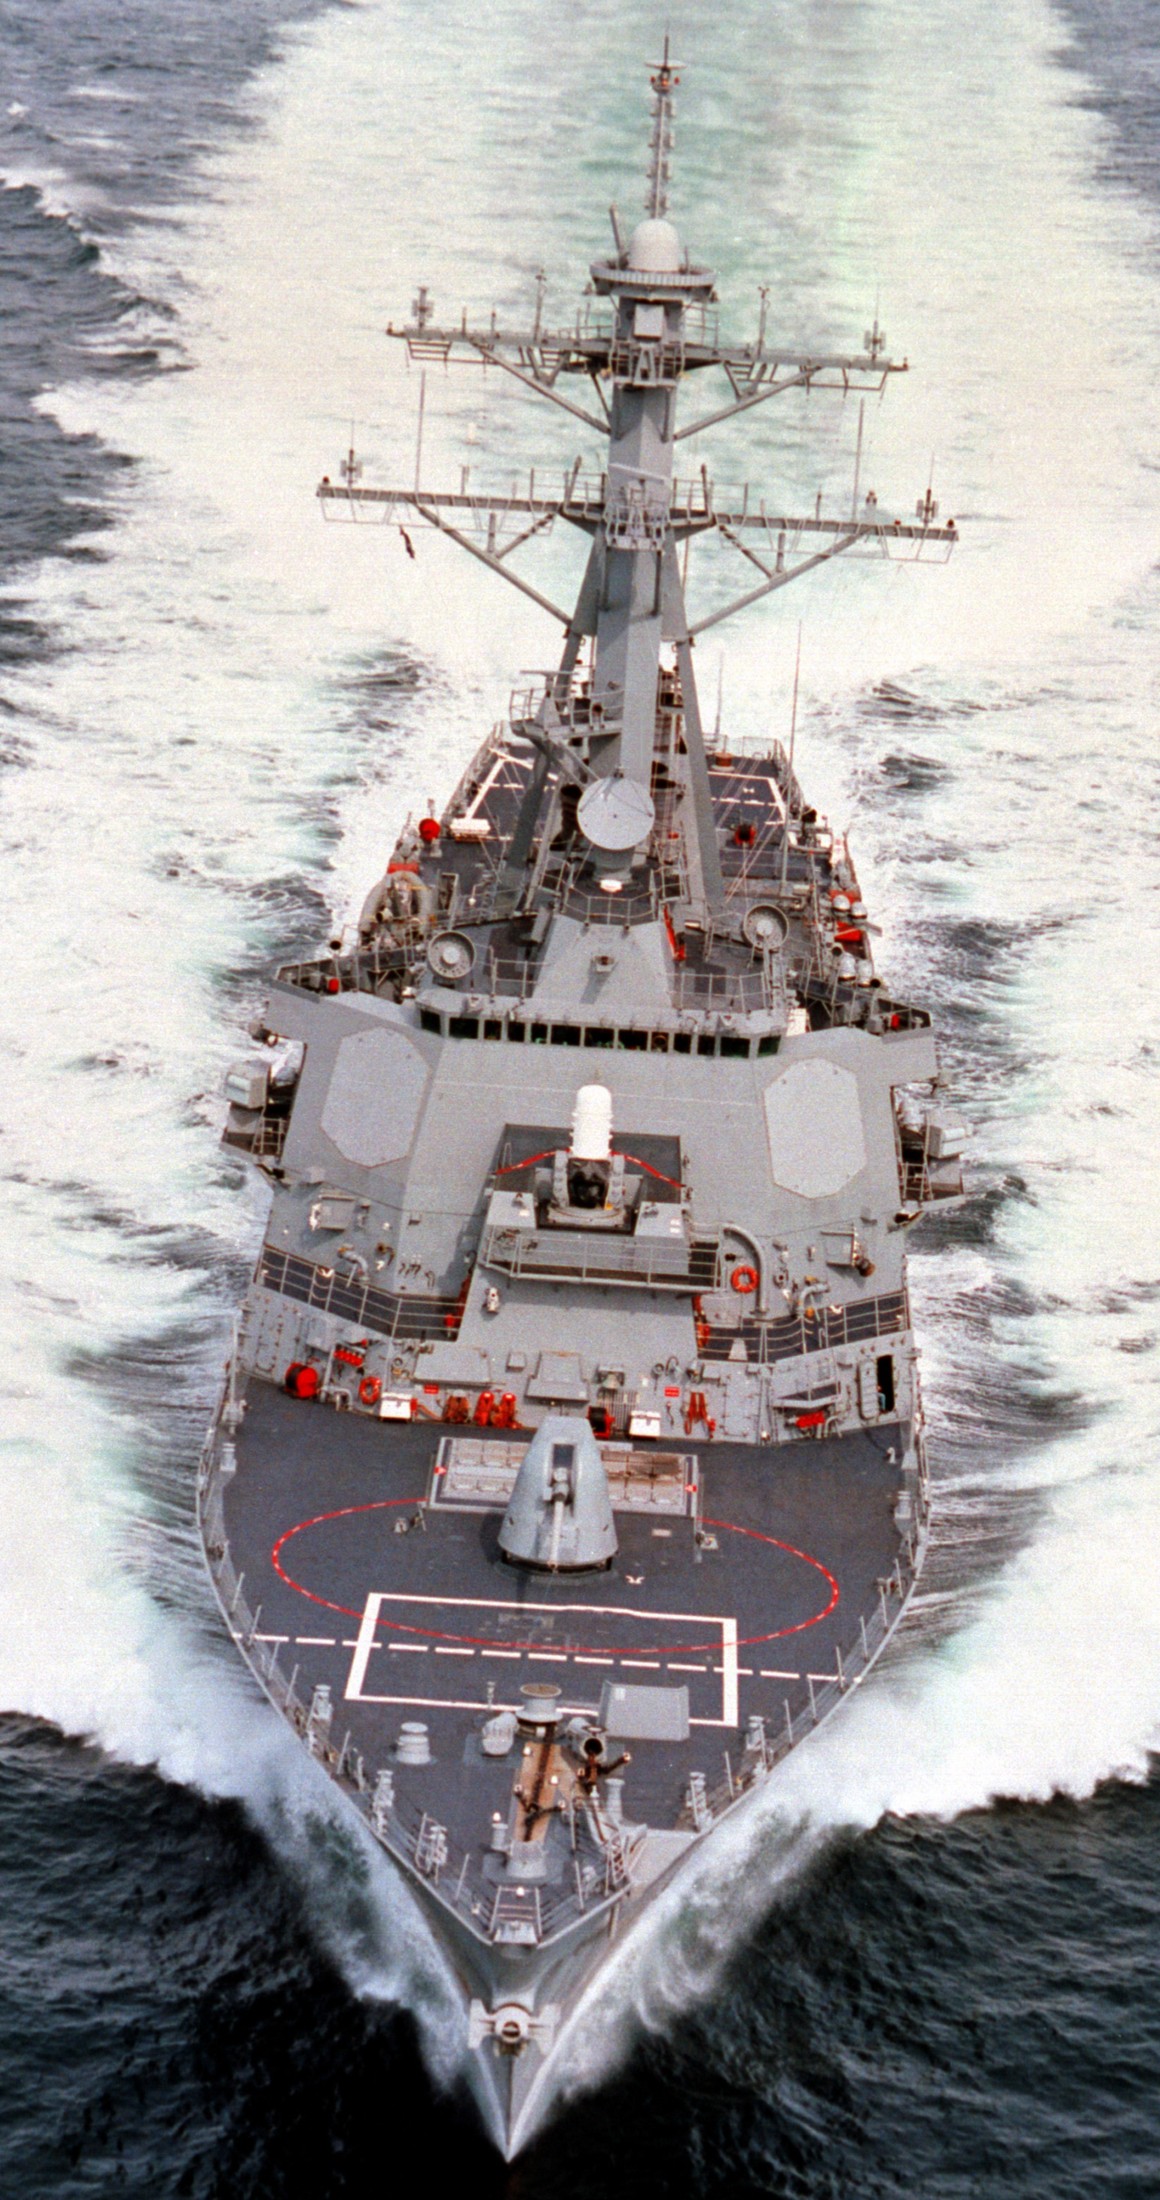 ddg-66 uss gonzalez guided missile destroyer arleigh burke class aegis sea trials bath iron works 55